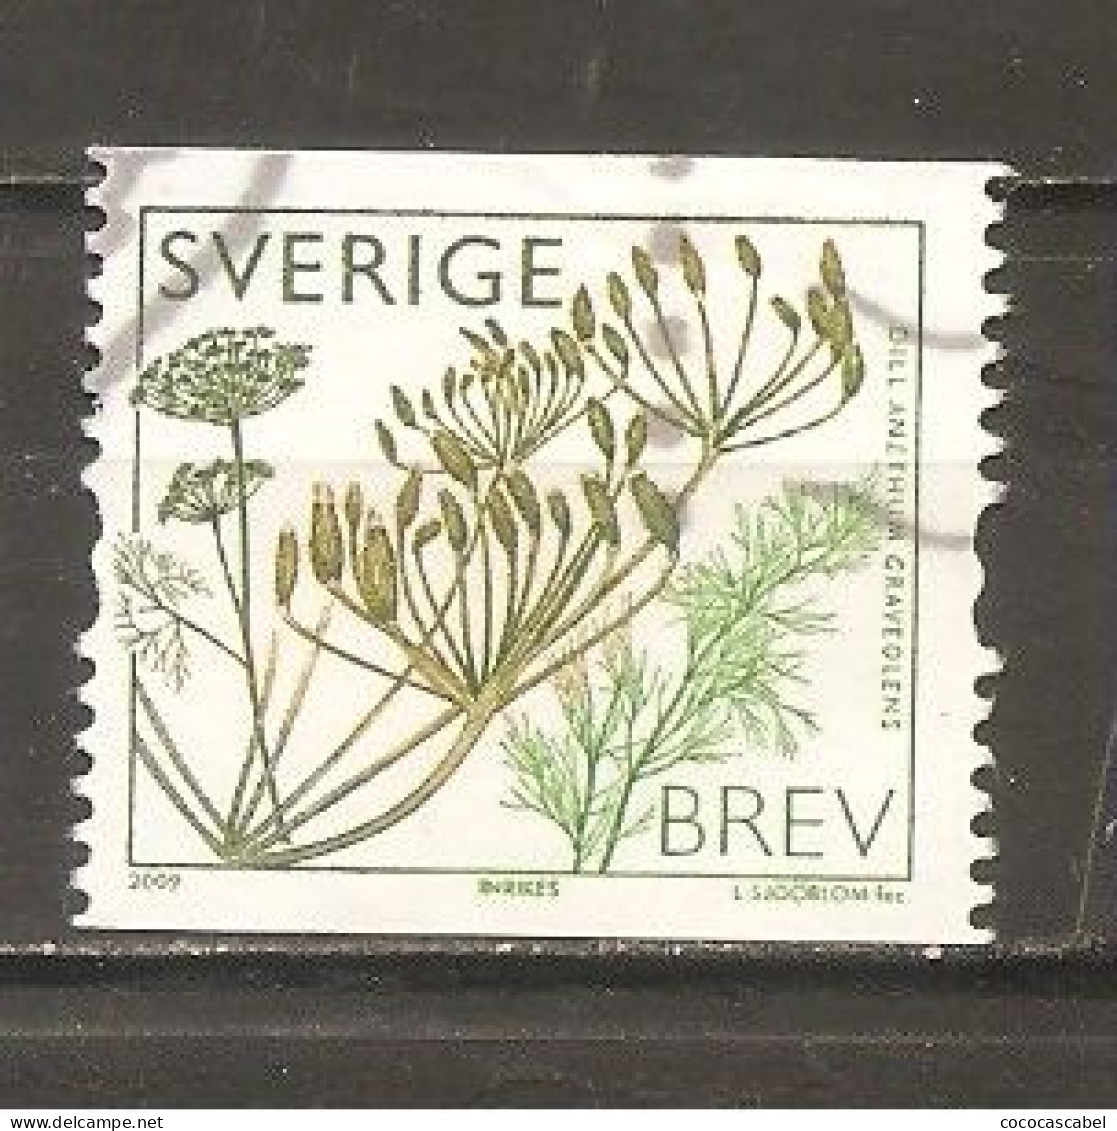 Suecia-Sweden Nº Yvert  2701 (usado) (o) - Used Stamps